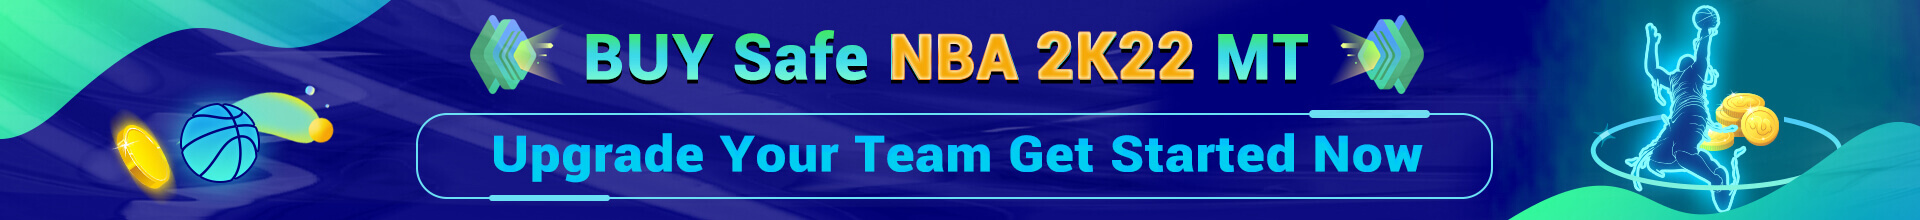 NBA 2K22 mt banner